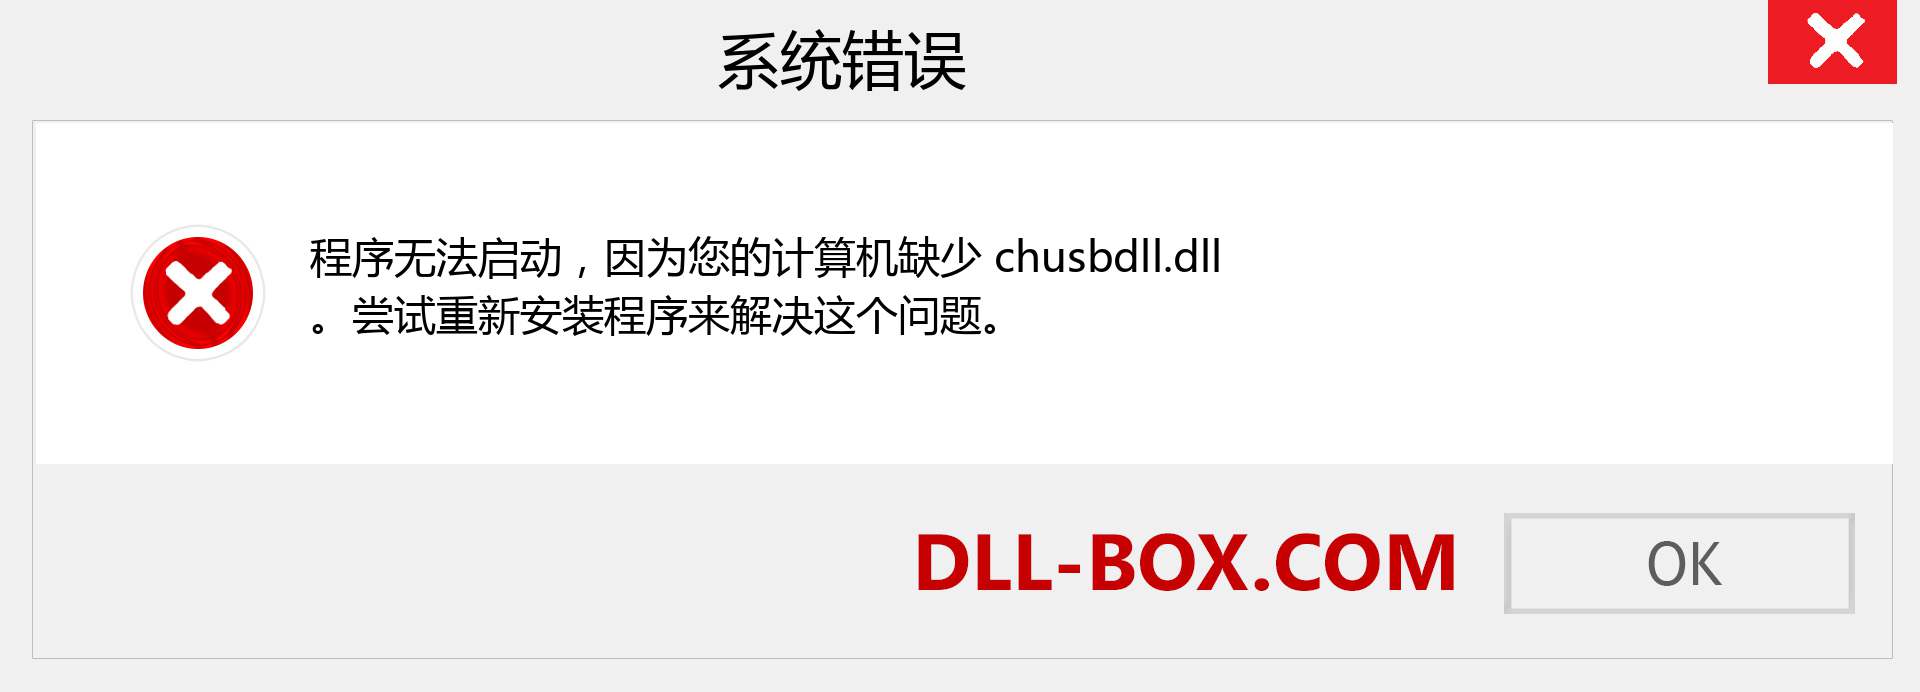 chusbdll.dll 文件丢失？。 适用于 Windows 7、8、10 的下载 - 修复 Windows、照片、图像上的 chusbdll dll 丢失错误